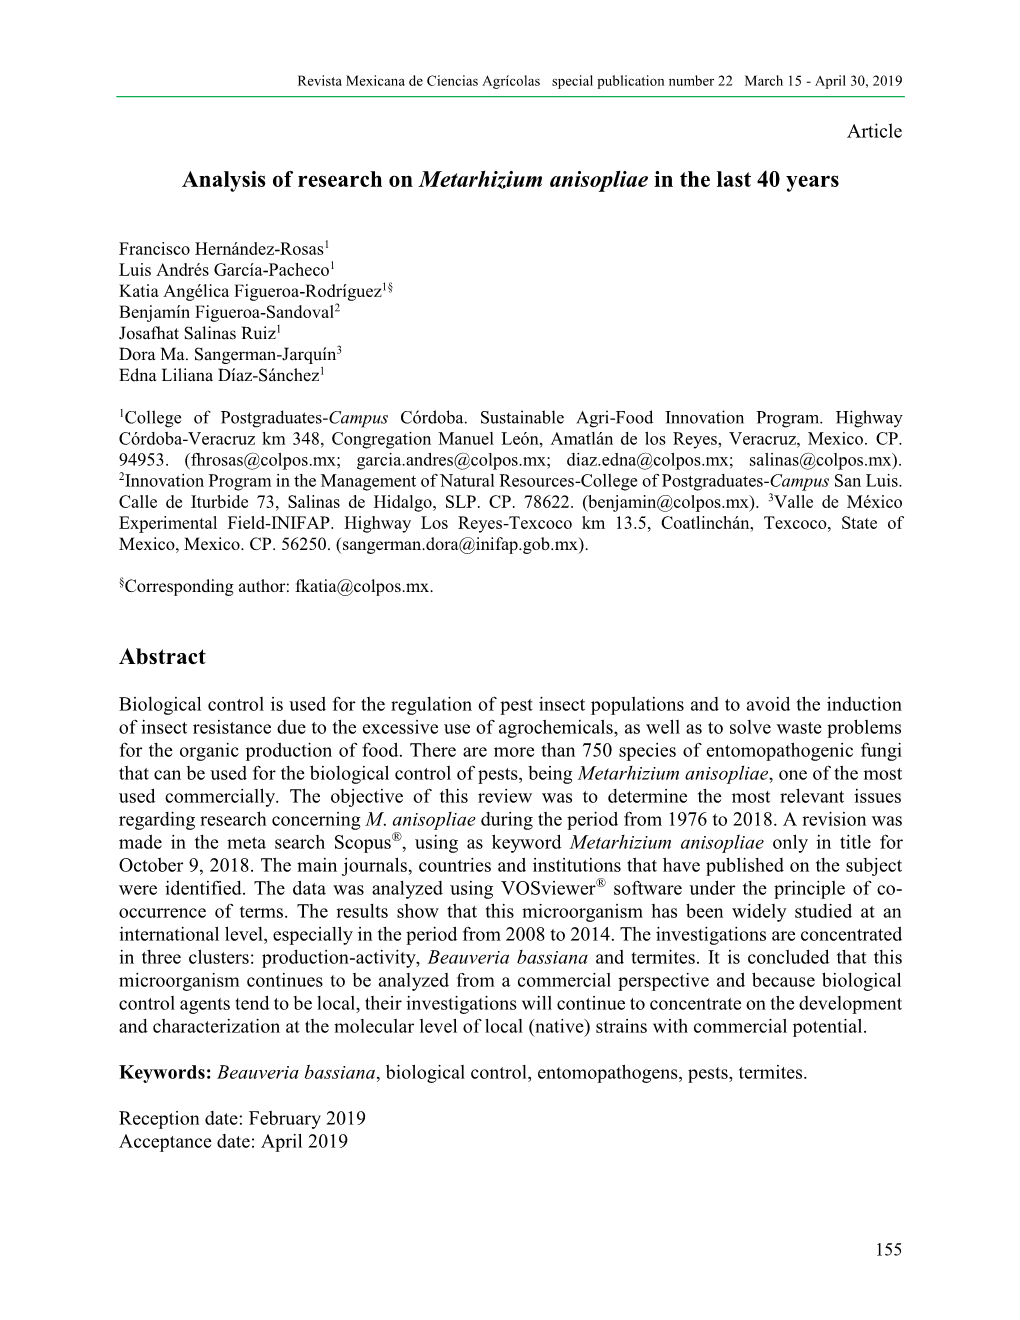 Analysis of Research on Metarhizium Anisopliae in the Last 40 Years